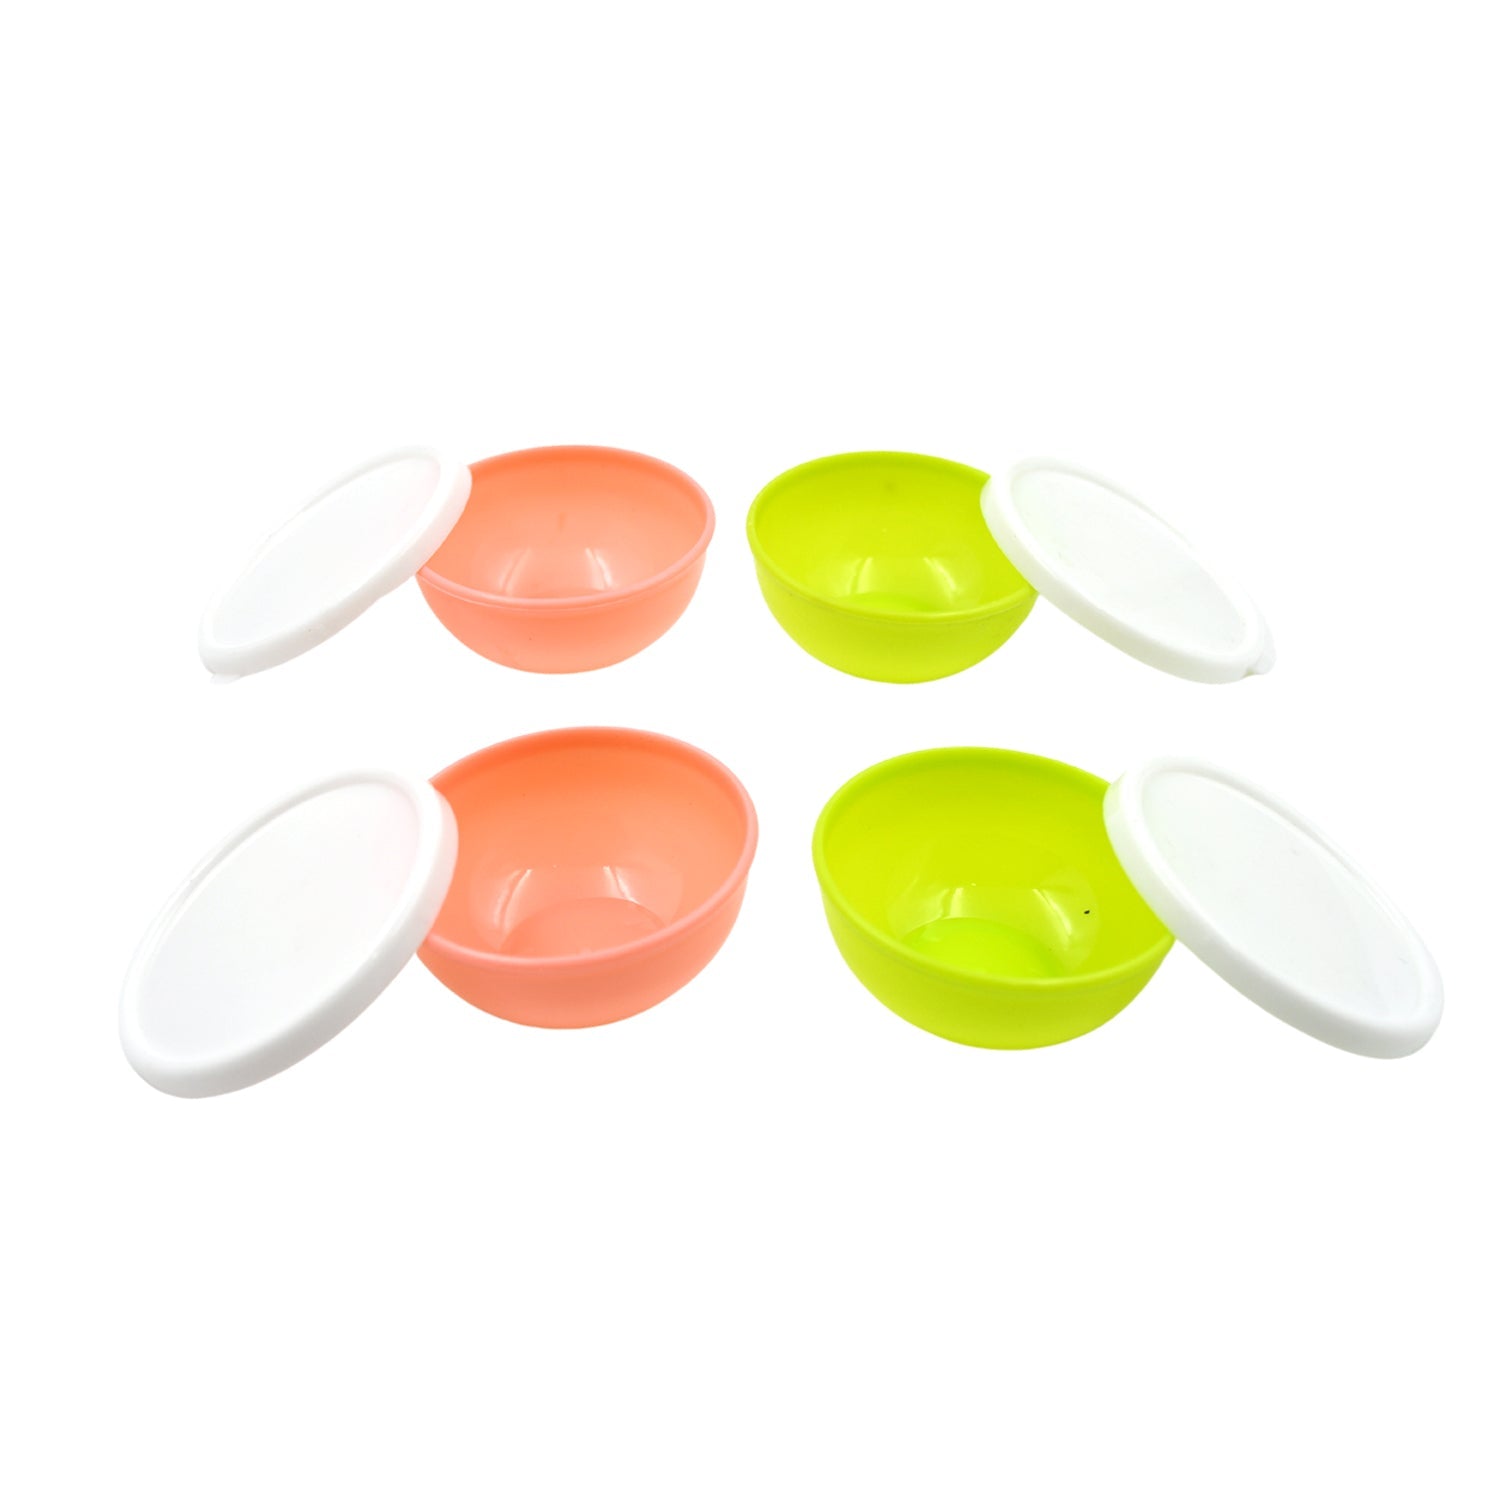 5558 Multipurpose Small Round Plastic Bowl / Katori With Lid, Microwave Safe Reusable Lightweight Bowl, Dishwasher Safe Chutney Bowl (4 Pcs Set)